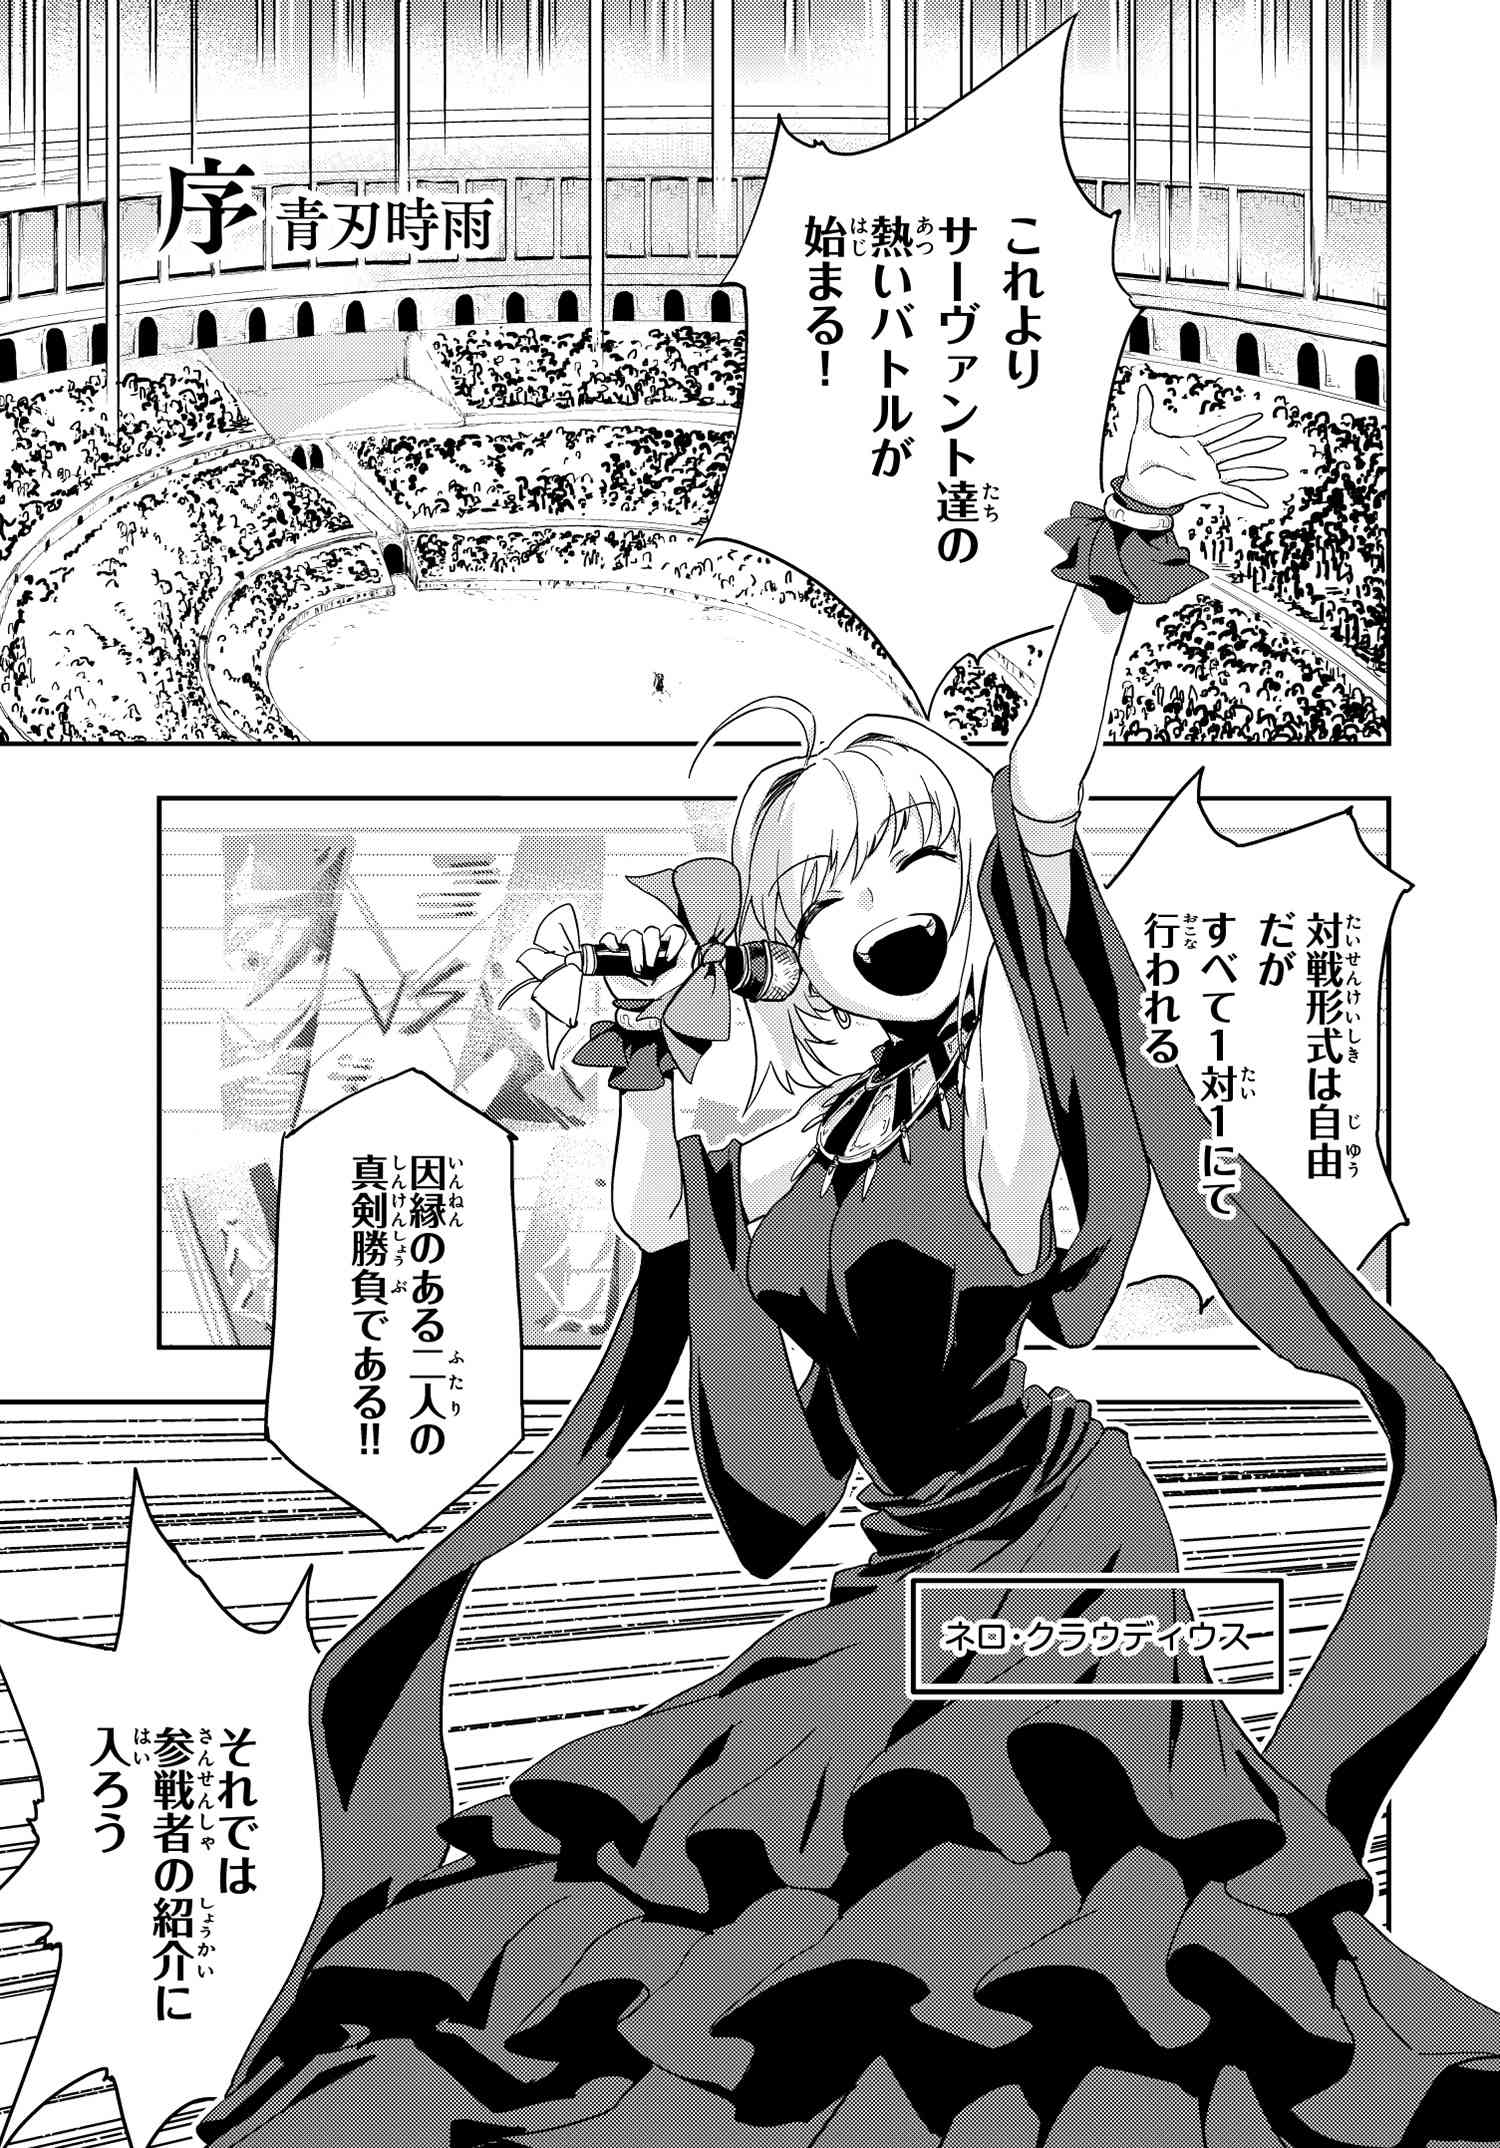 Fate Grand Order コミックアラカルト Plus Sp 対決編 序 漫画 青葉時雨 Type Moonコミックエース 無料で漫画が読めるオンラインマガジン